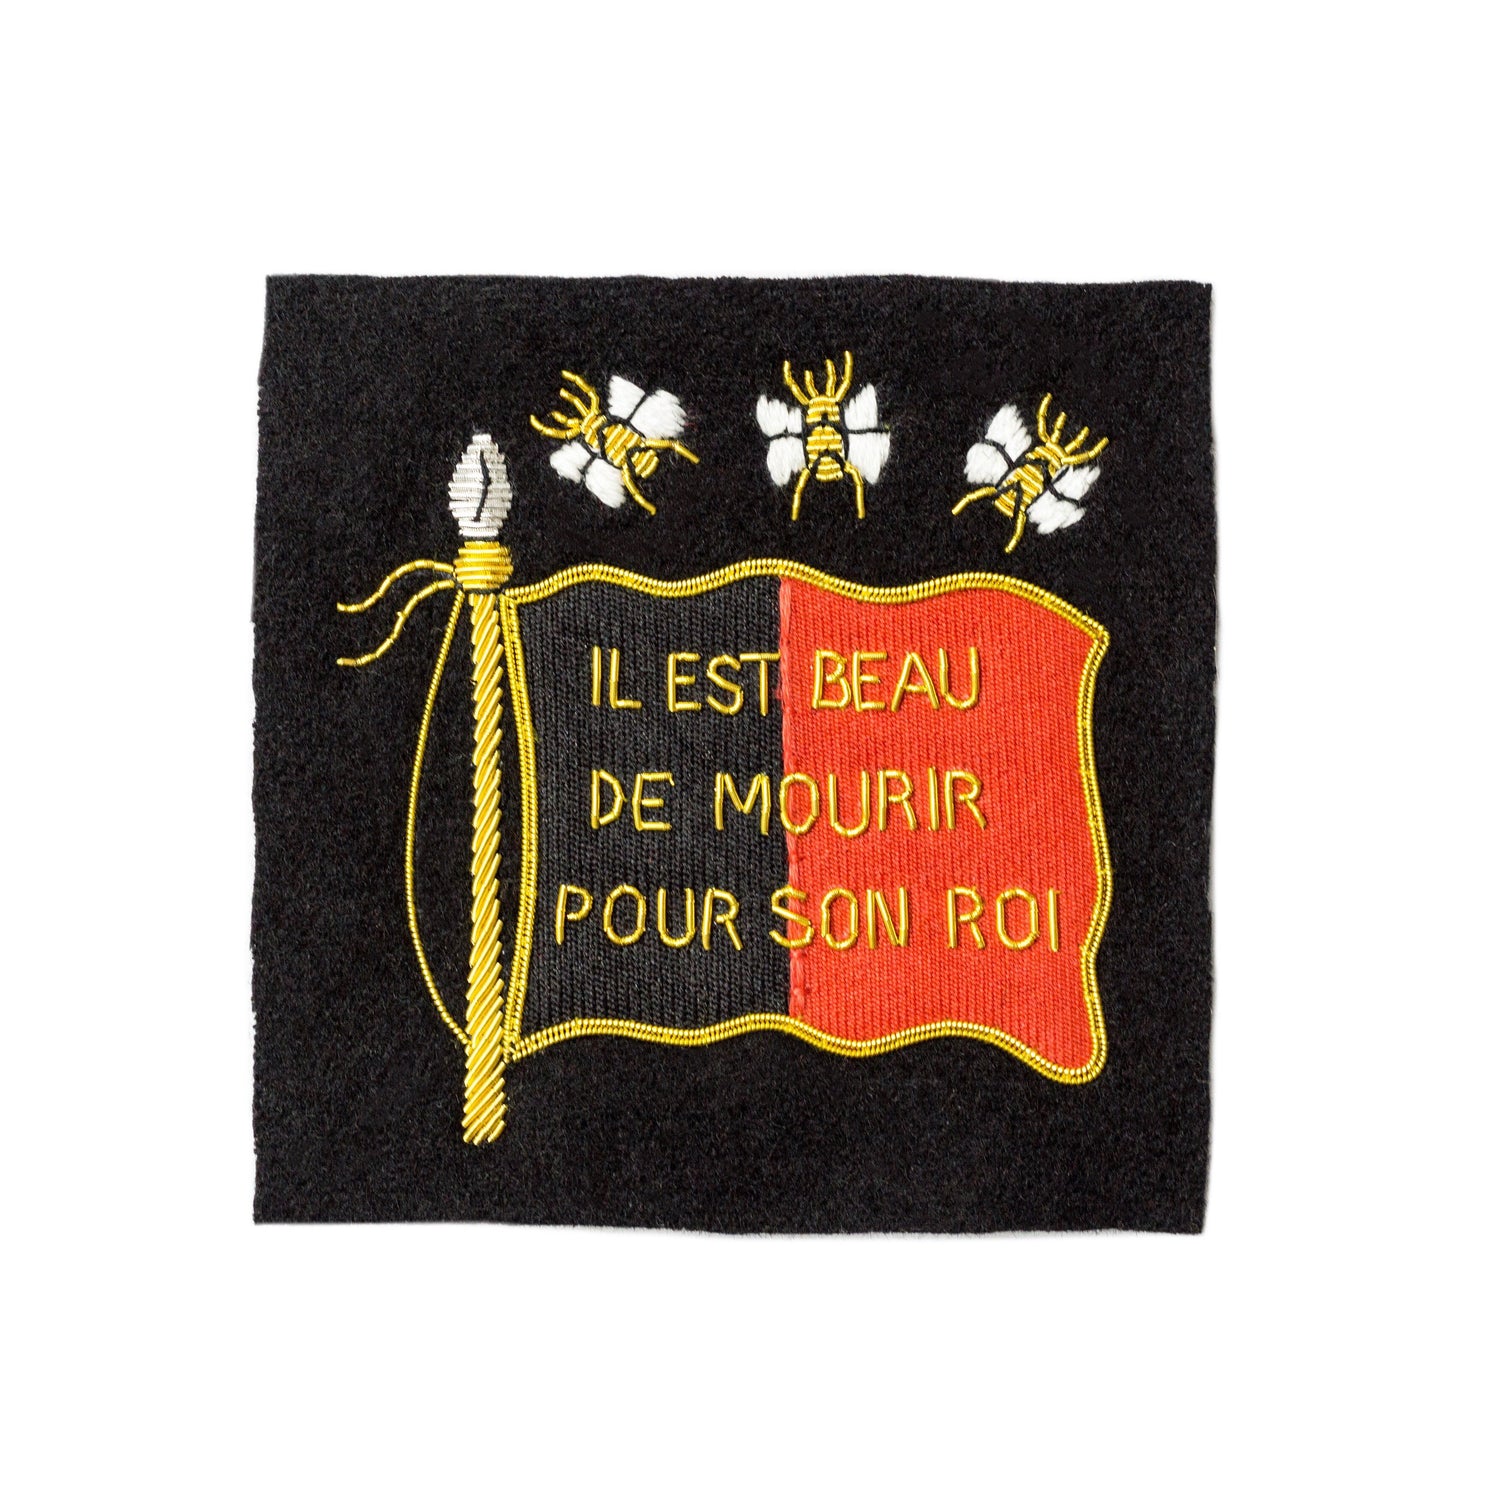 Embroidered gold work Banner of Henri Chritstophe badge.